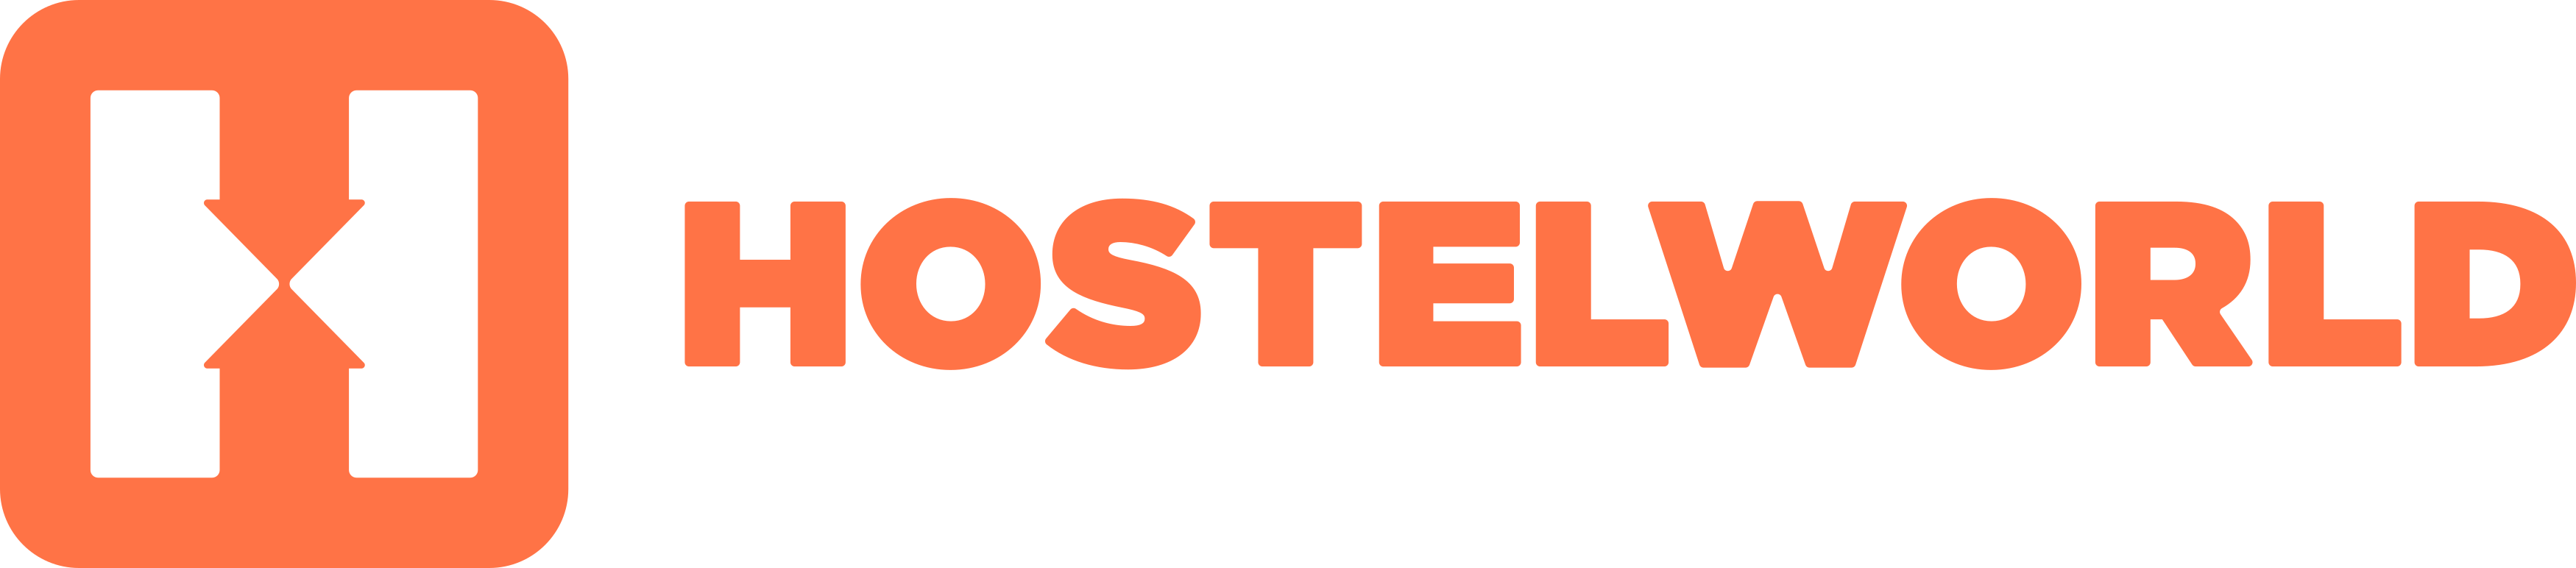 hostel world logo.